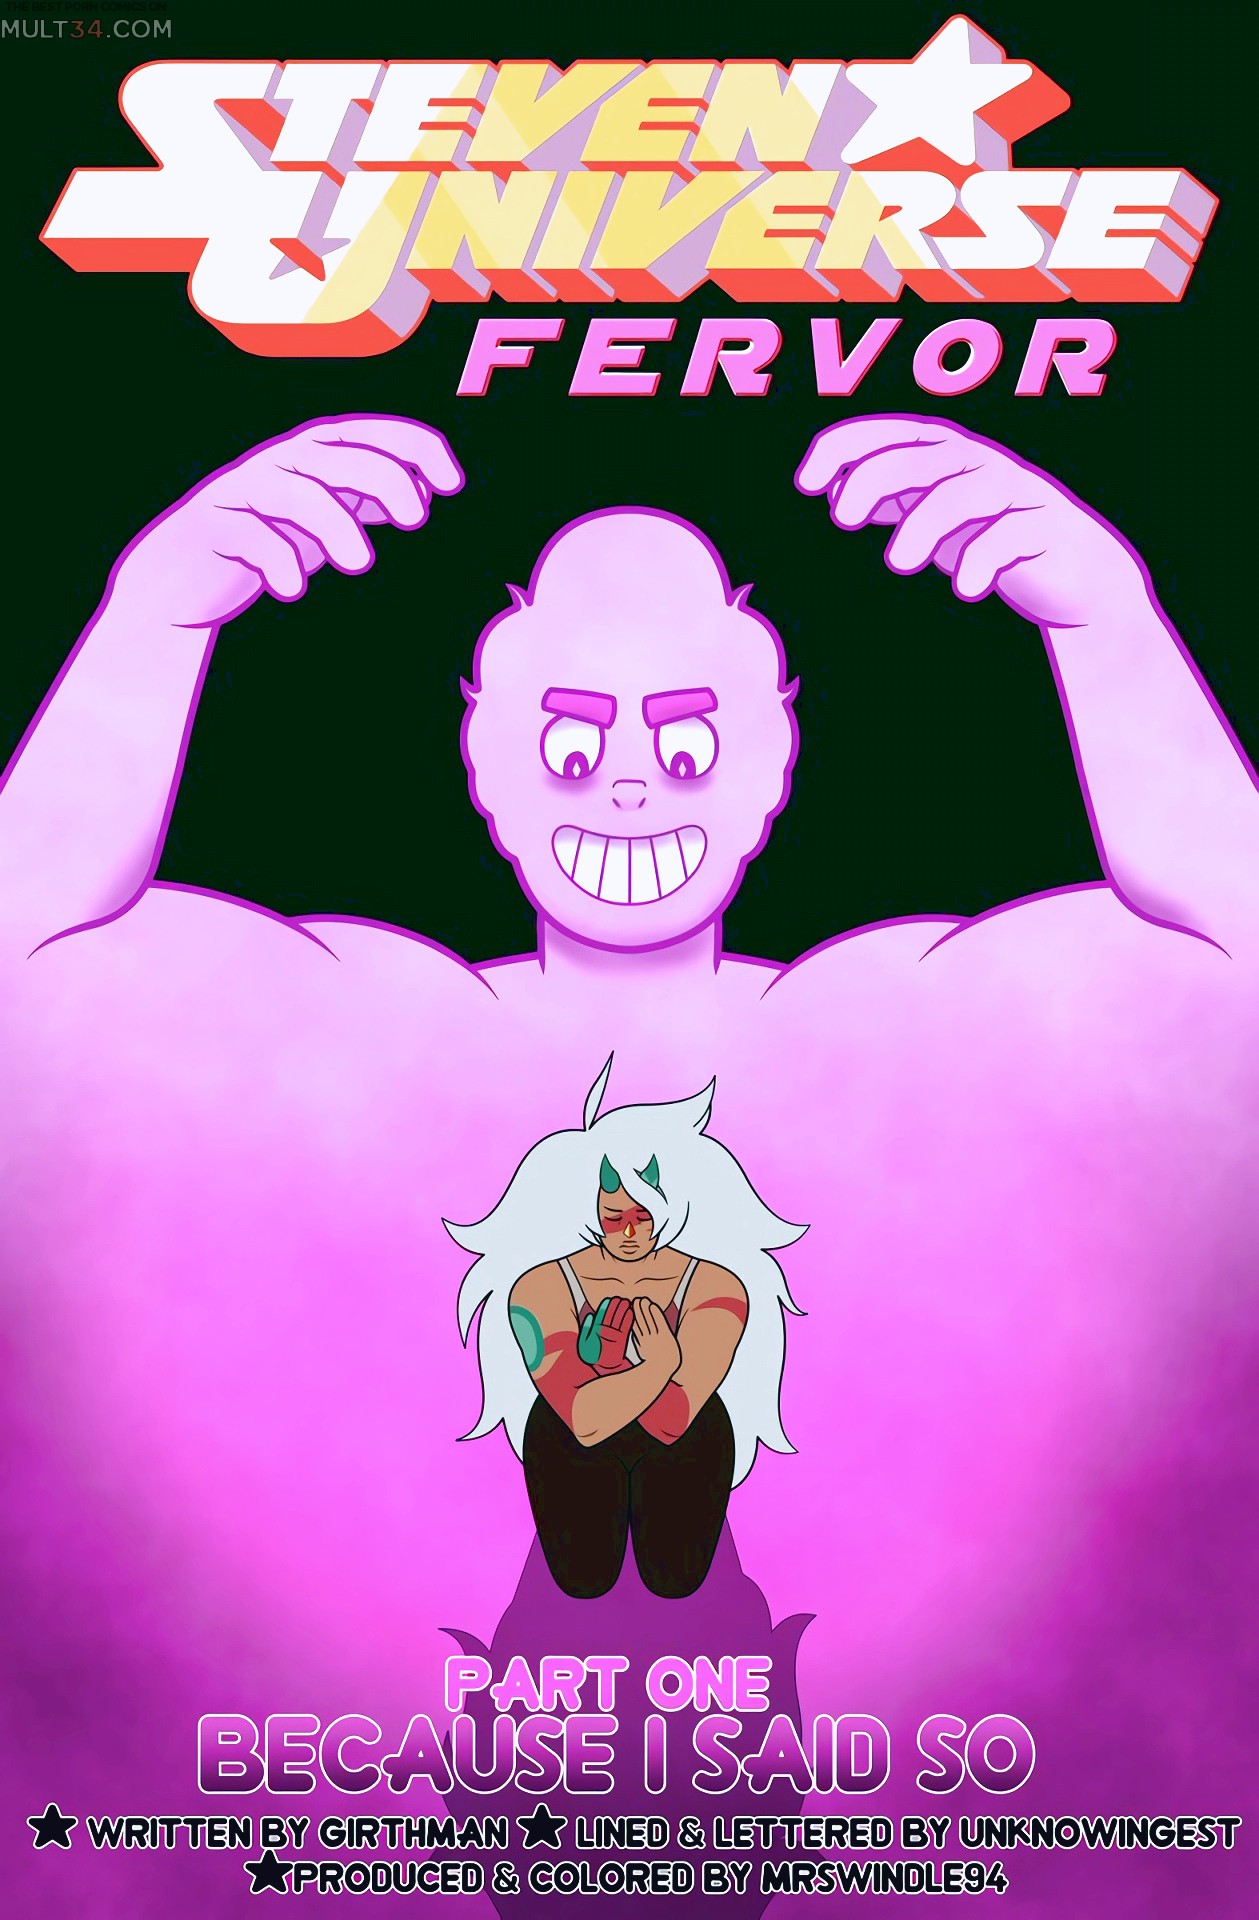 Steven Universe Fervor porn comic - the best cartoon porn comics, Rule 34 |  MULT34